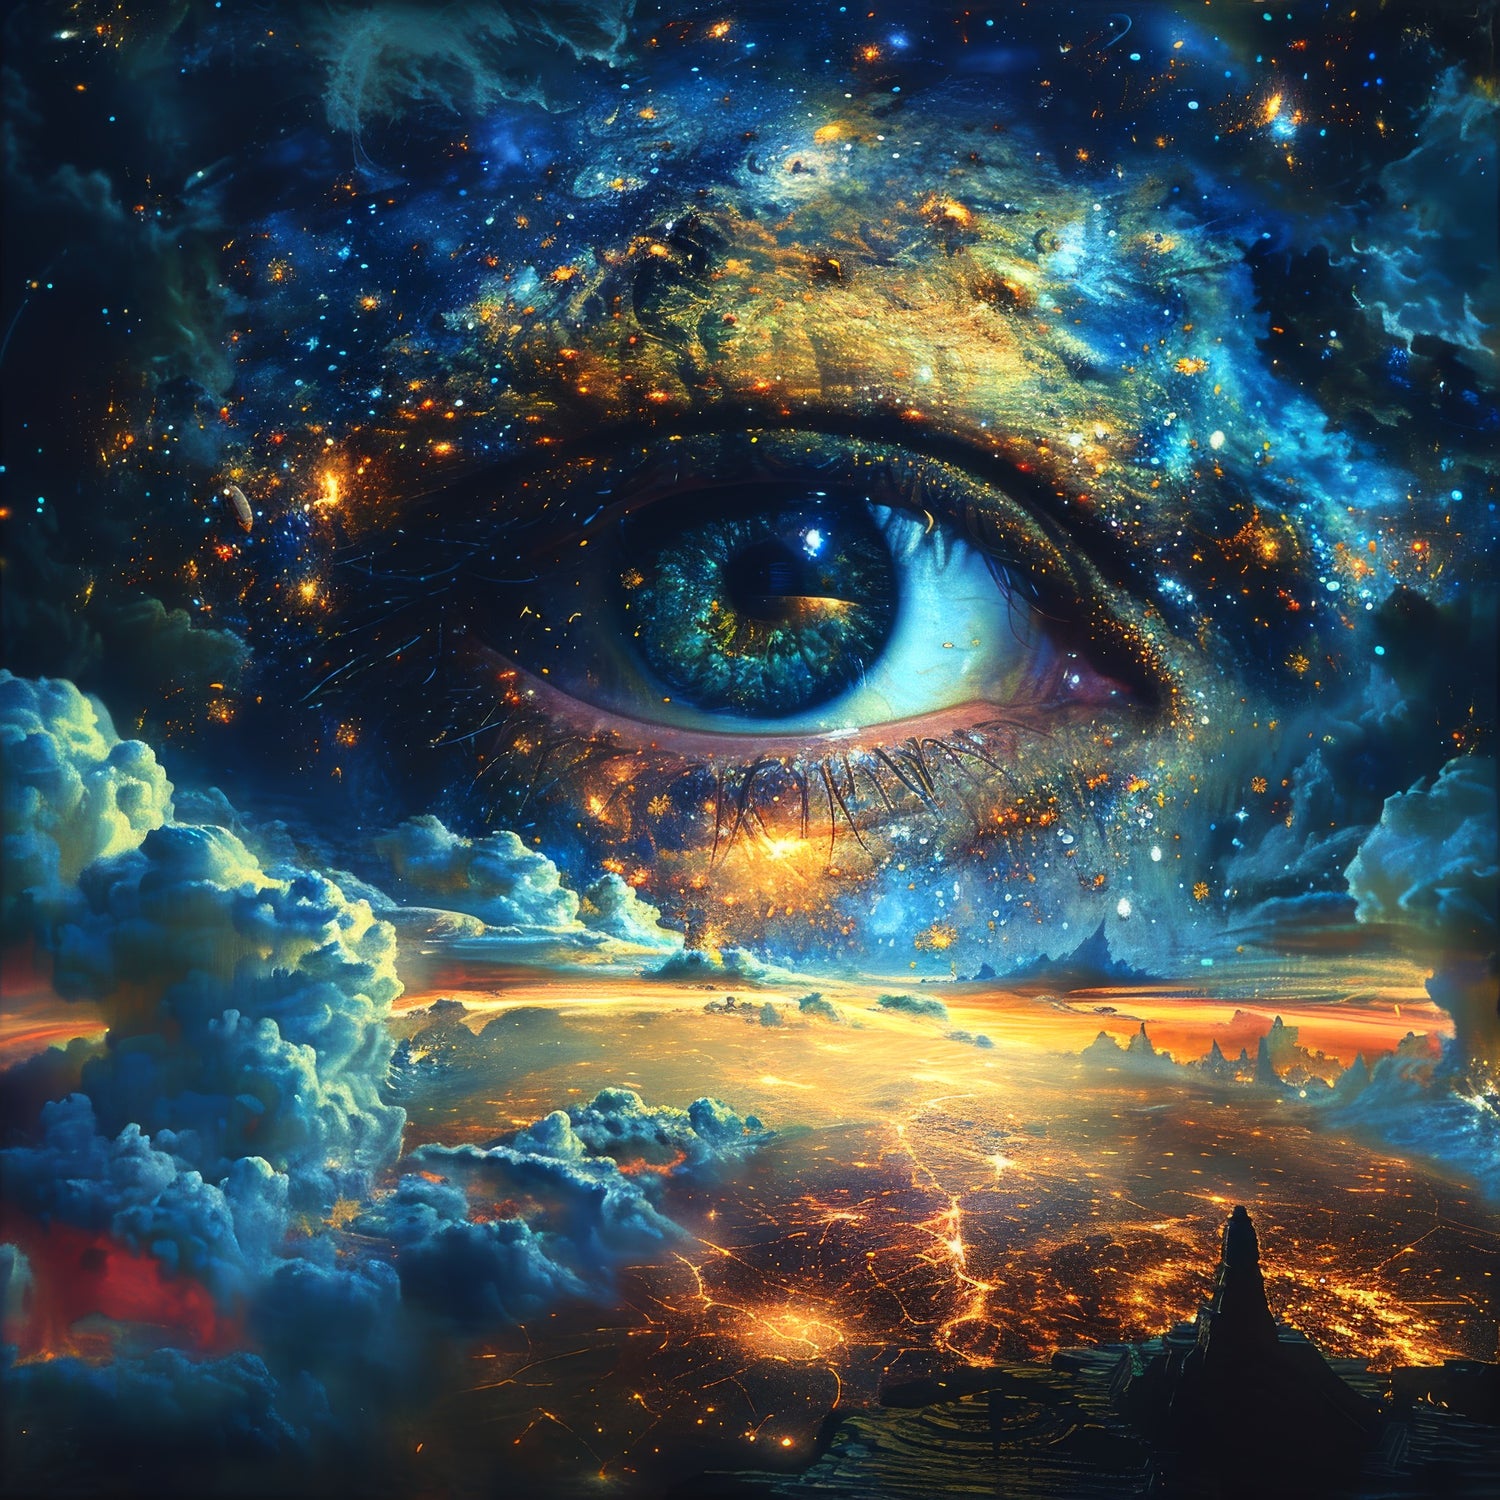 Celestial Canvas Eye_s Reflection